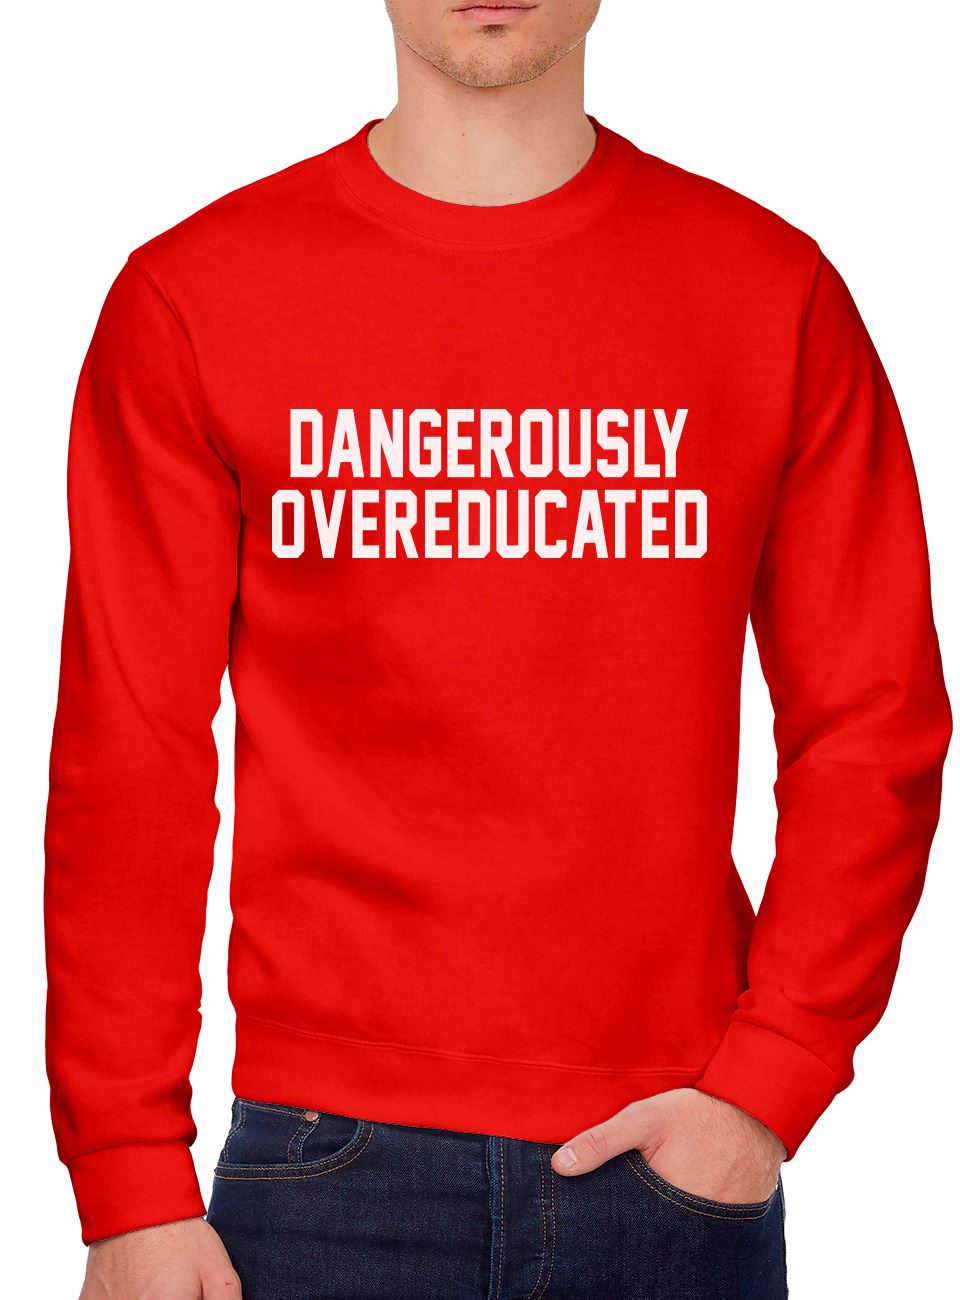 Dangerously Overeducated - Youth & Mens Sweatshirt